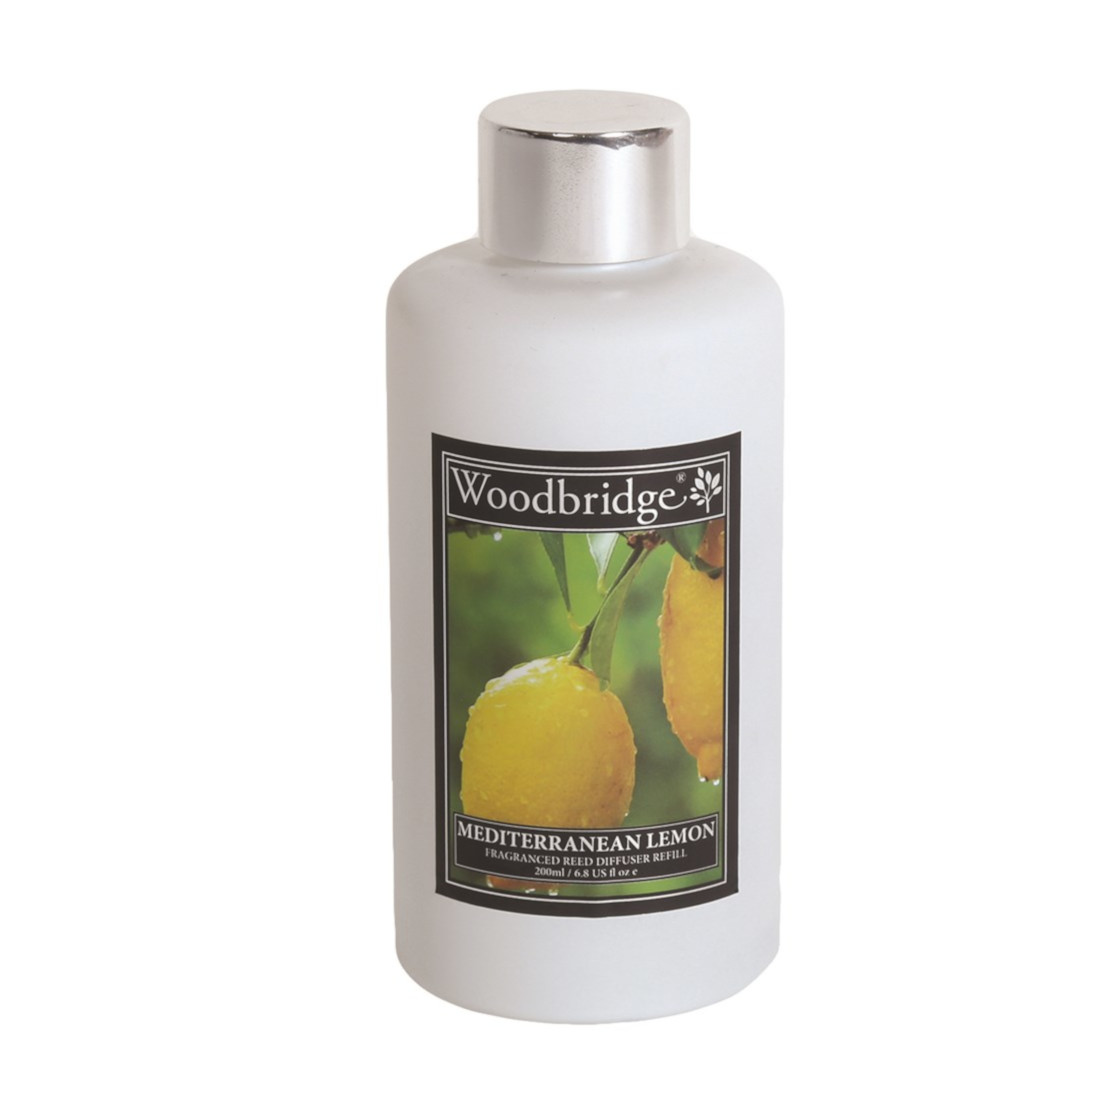 Woodbridge Mediterranean Lemon Diffuser Refill 200ml